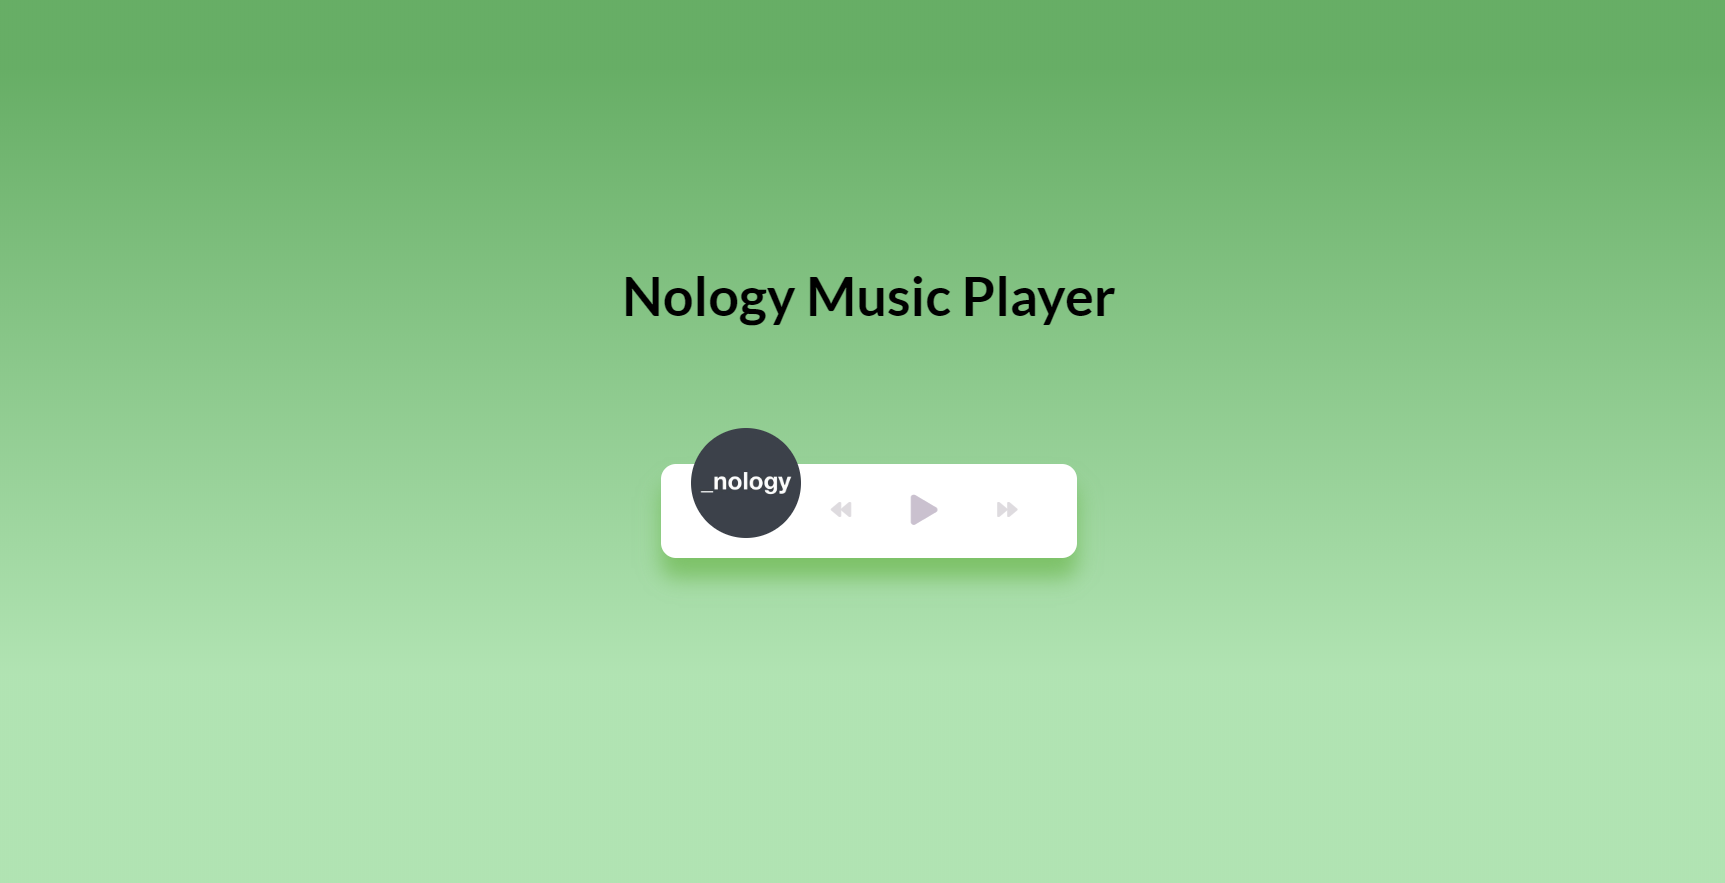 Nology Music Player